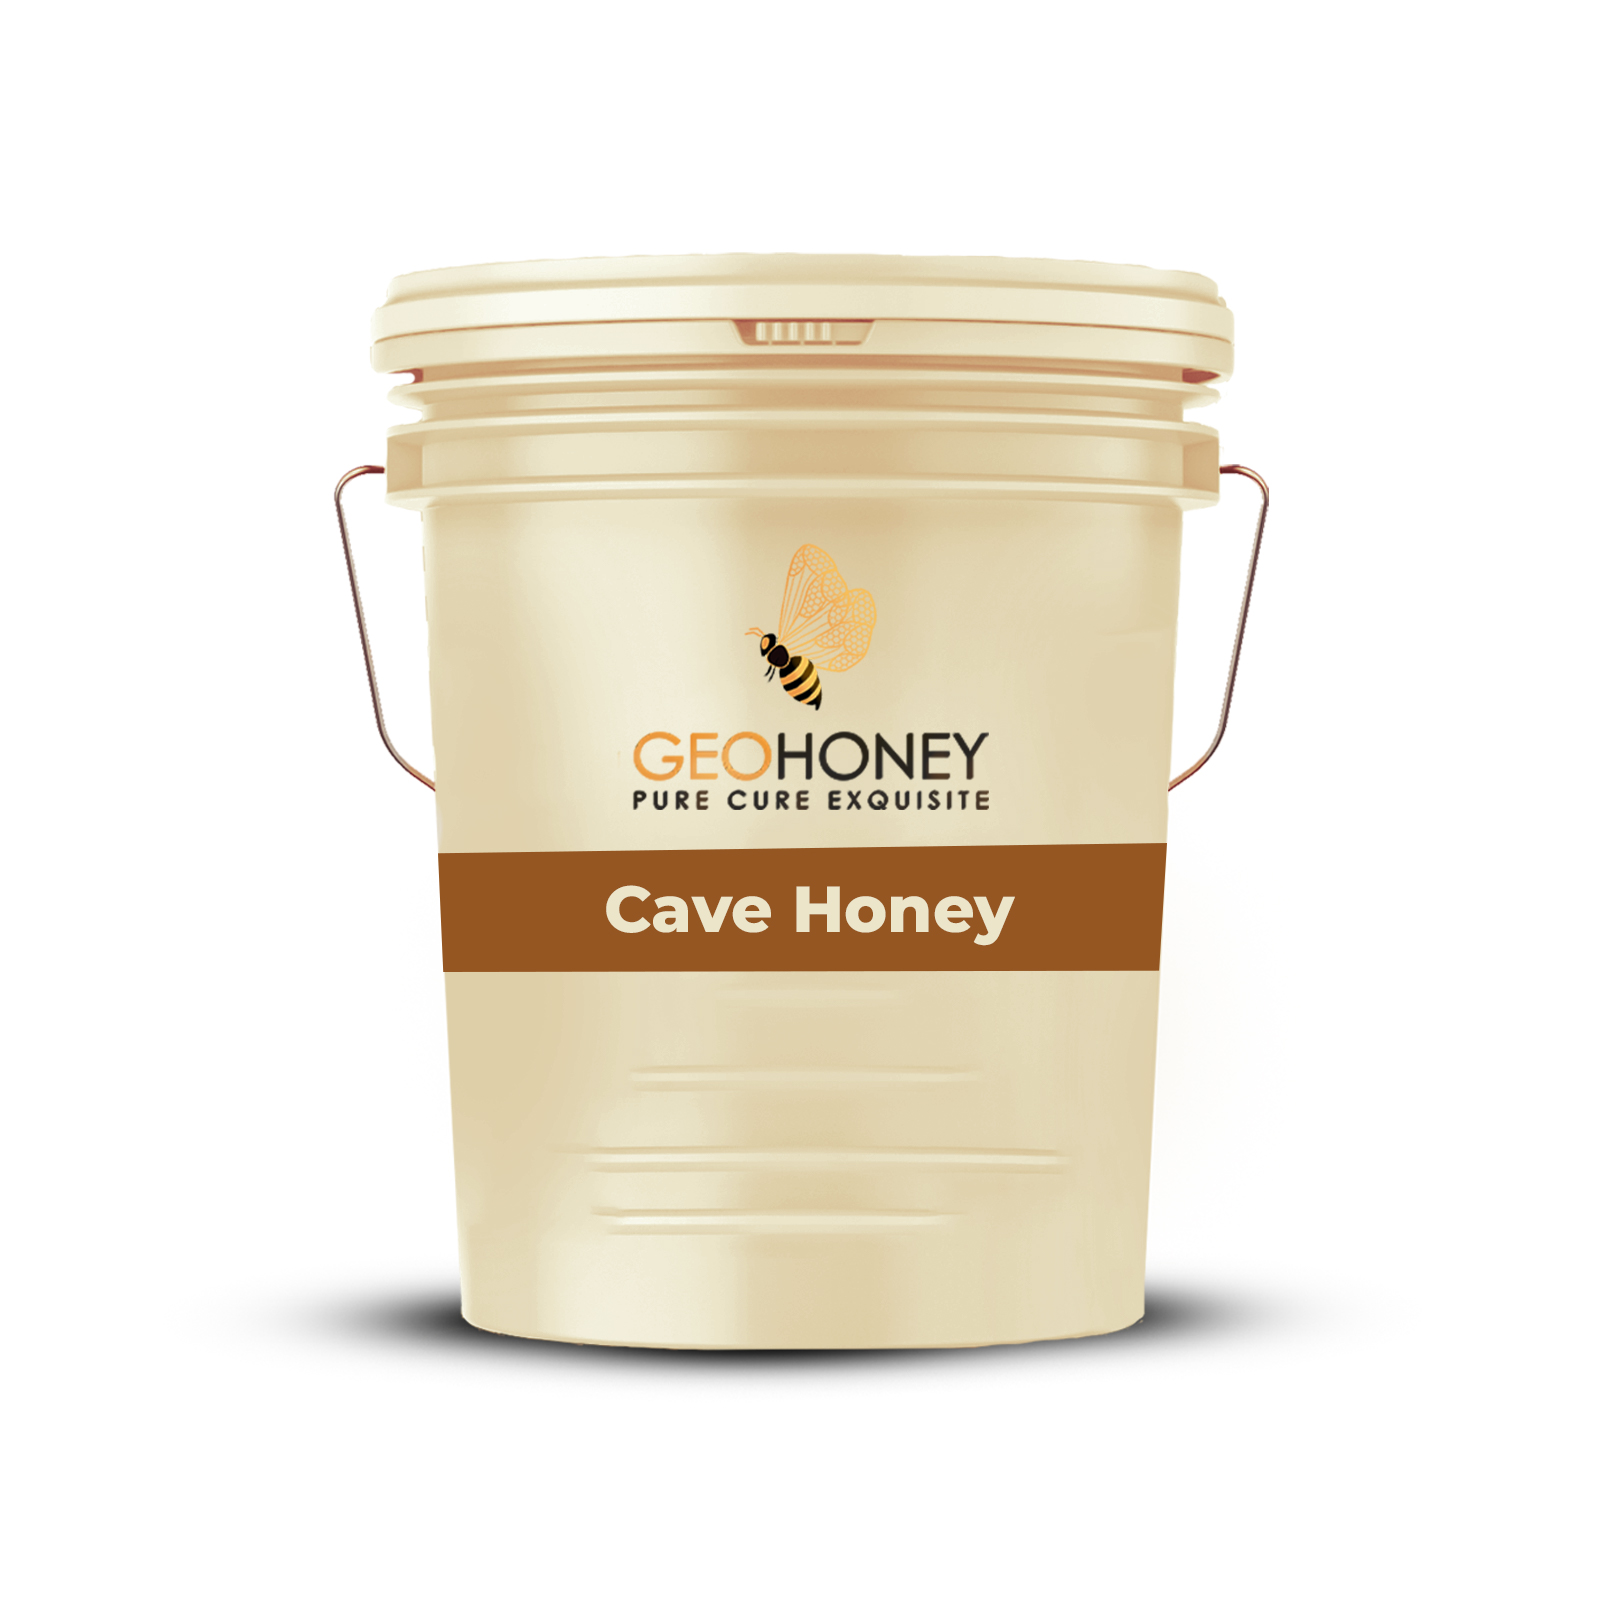 Cave Honey